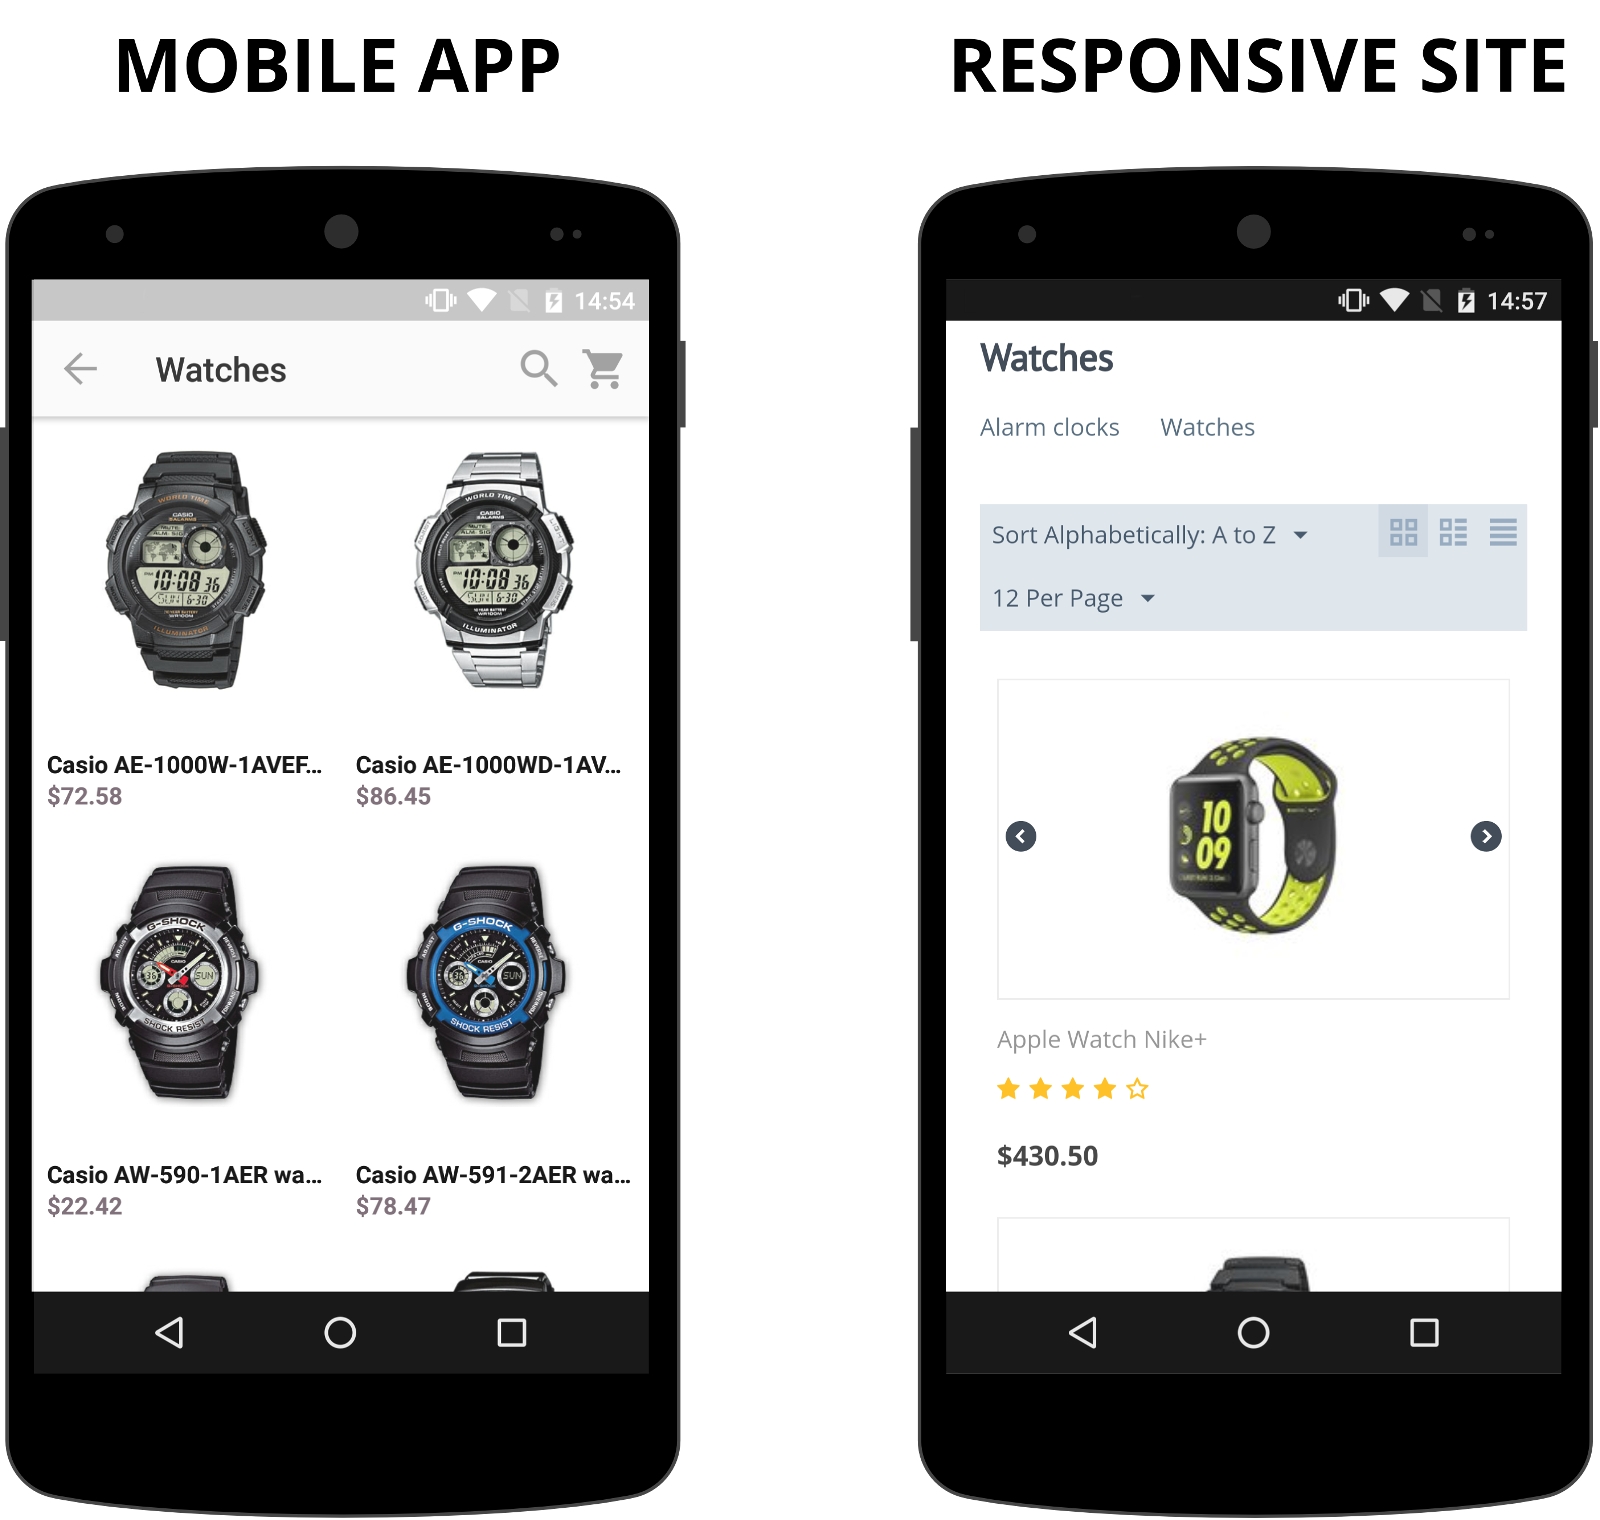 A responsive Multi-Vendor web site compared to a Mobile App.